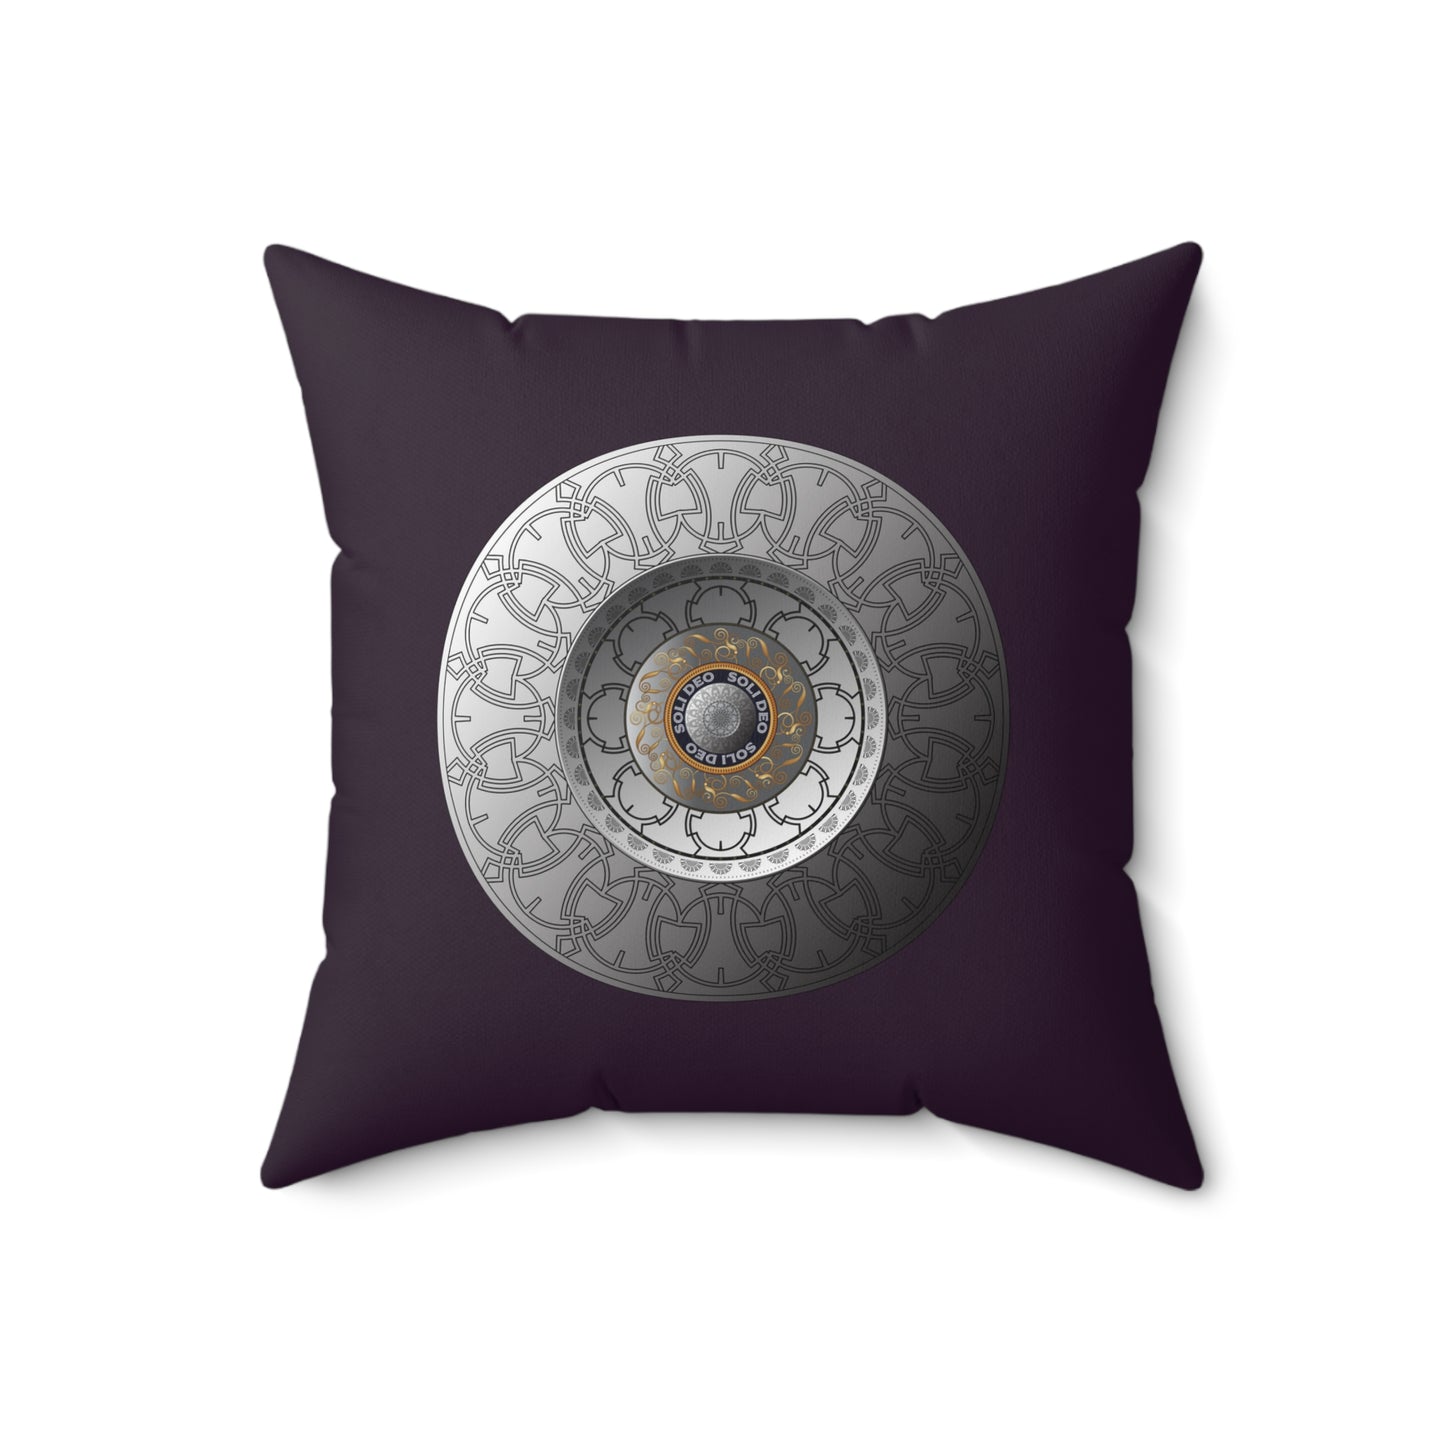 Spun Polyester Square Pillow Kukloso Mandala Designs No 4288 & No 151 A on Dark Purple - Free Shipping